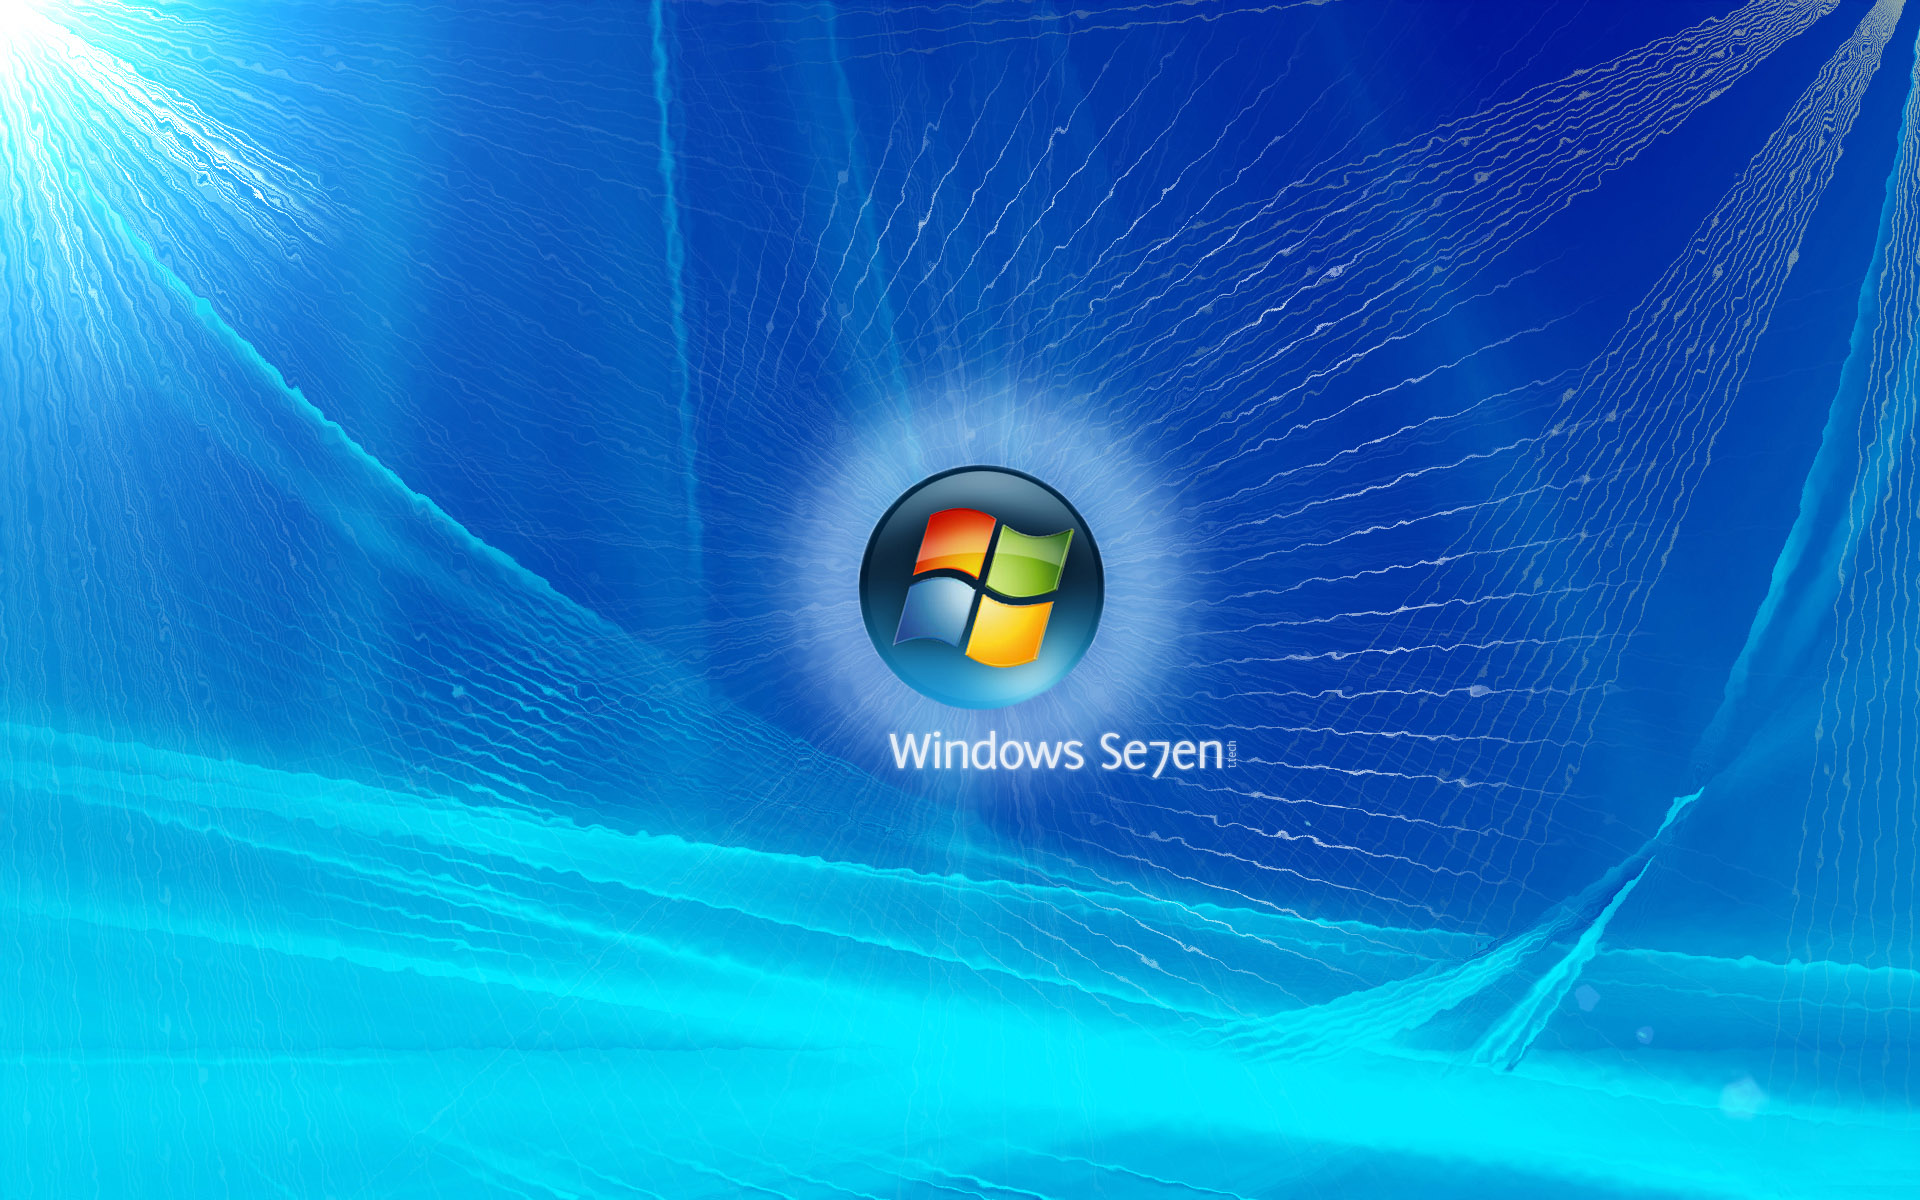 Win 7 re. Виндовс. Windows 7 рабочий стол. Обои Windows 7. Заставка Windows 7.